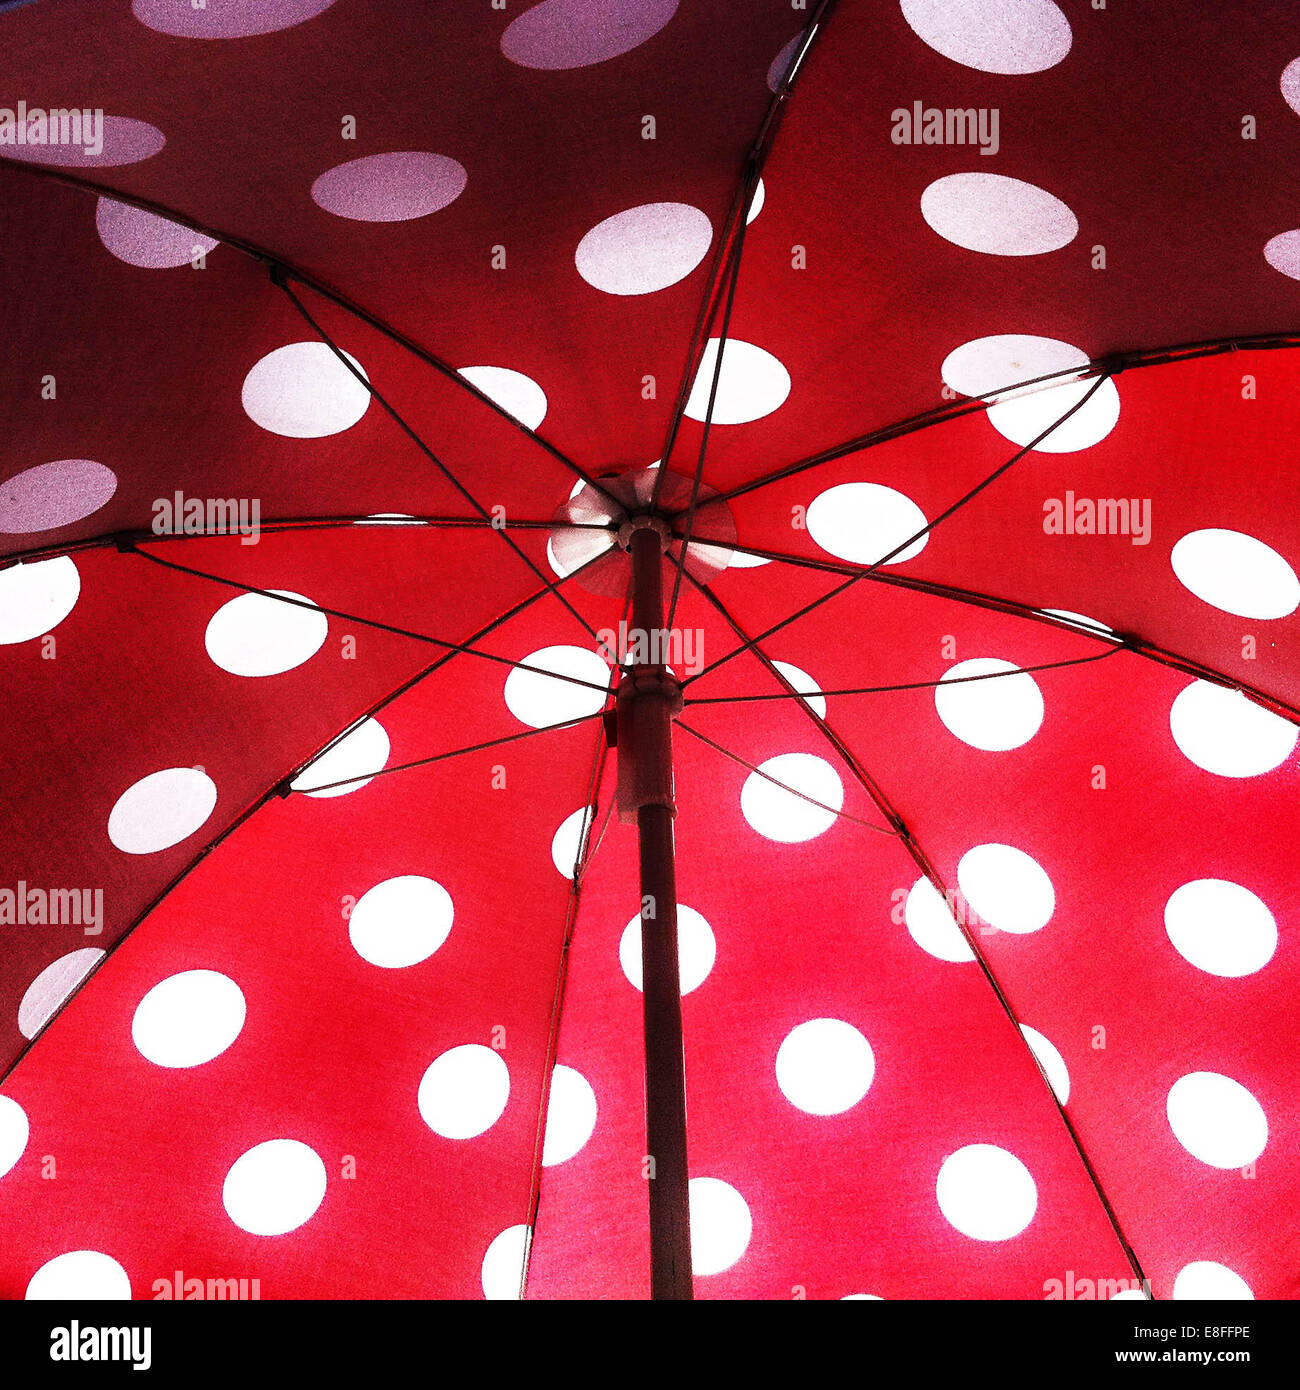 Open umbrella with polka dot pattern Stock Photo